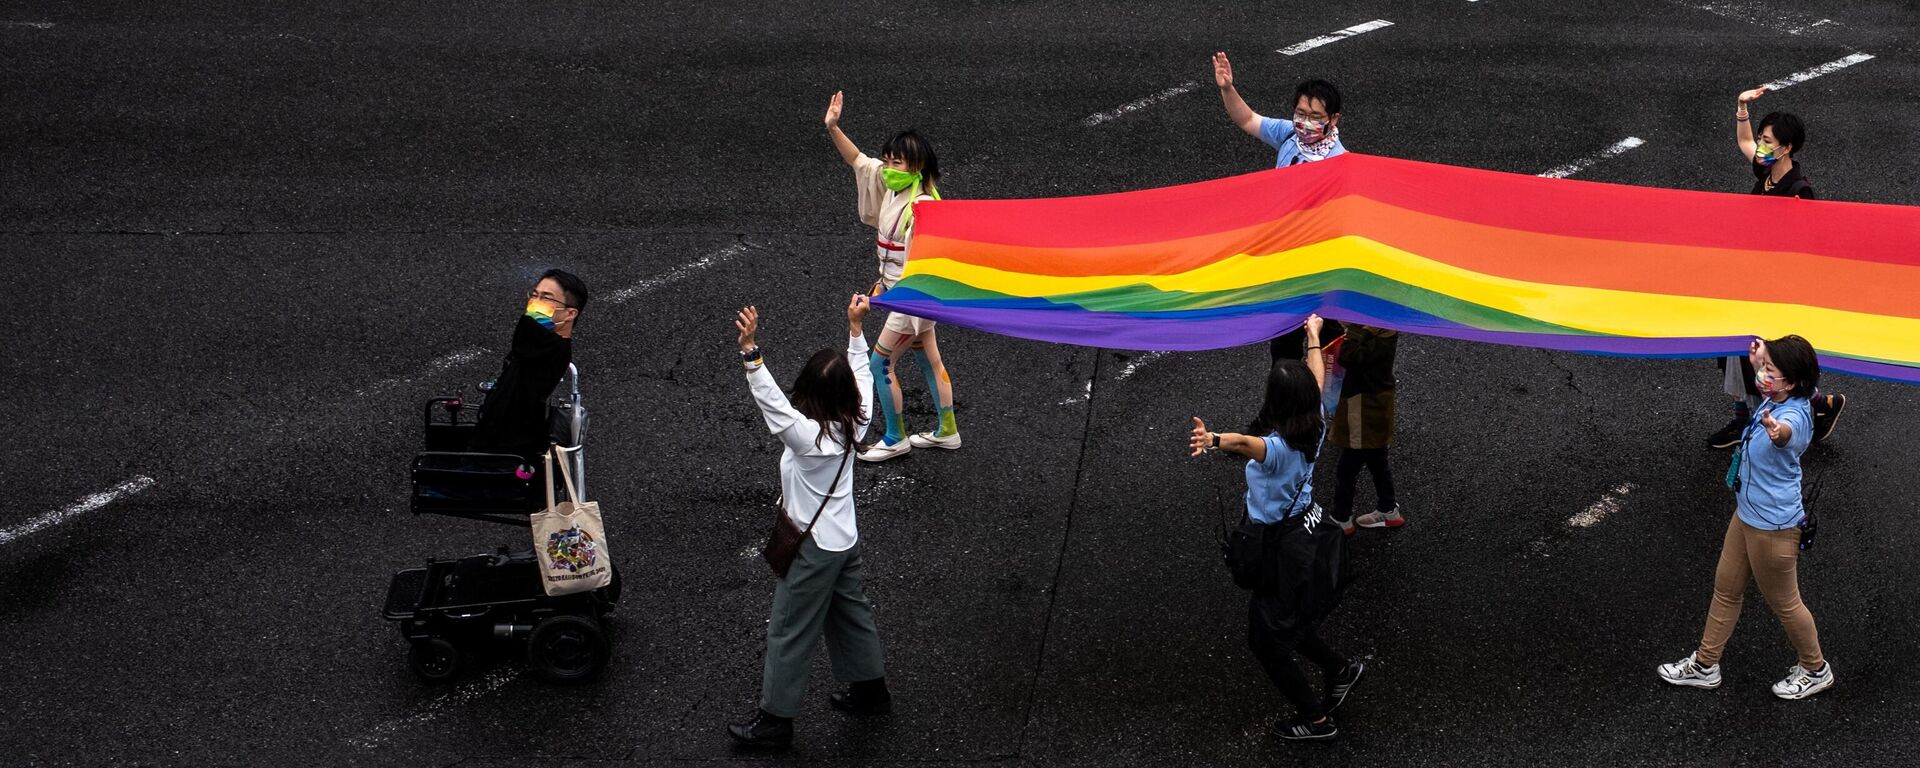 Tokyo Rainbow Pride 2022 - Sputnik 日本, 1920, 25.06.2022